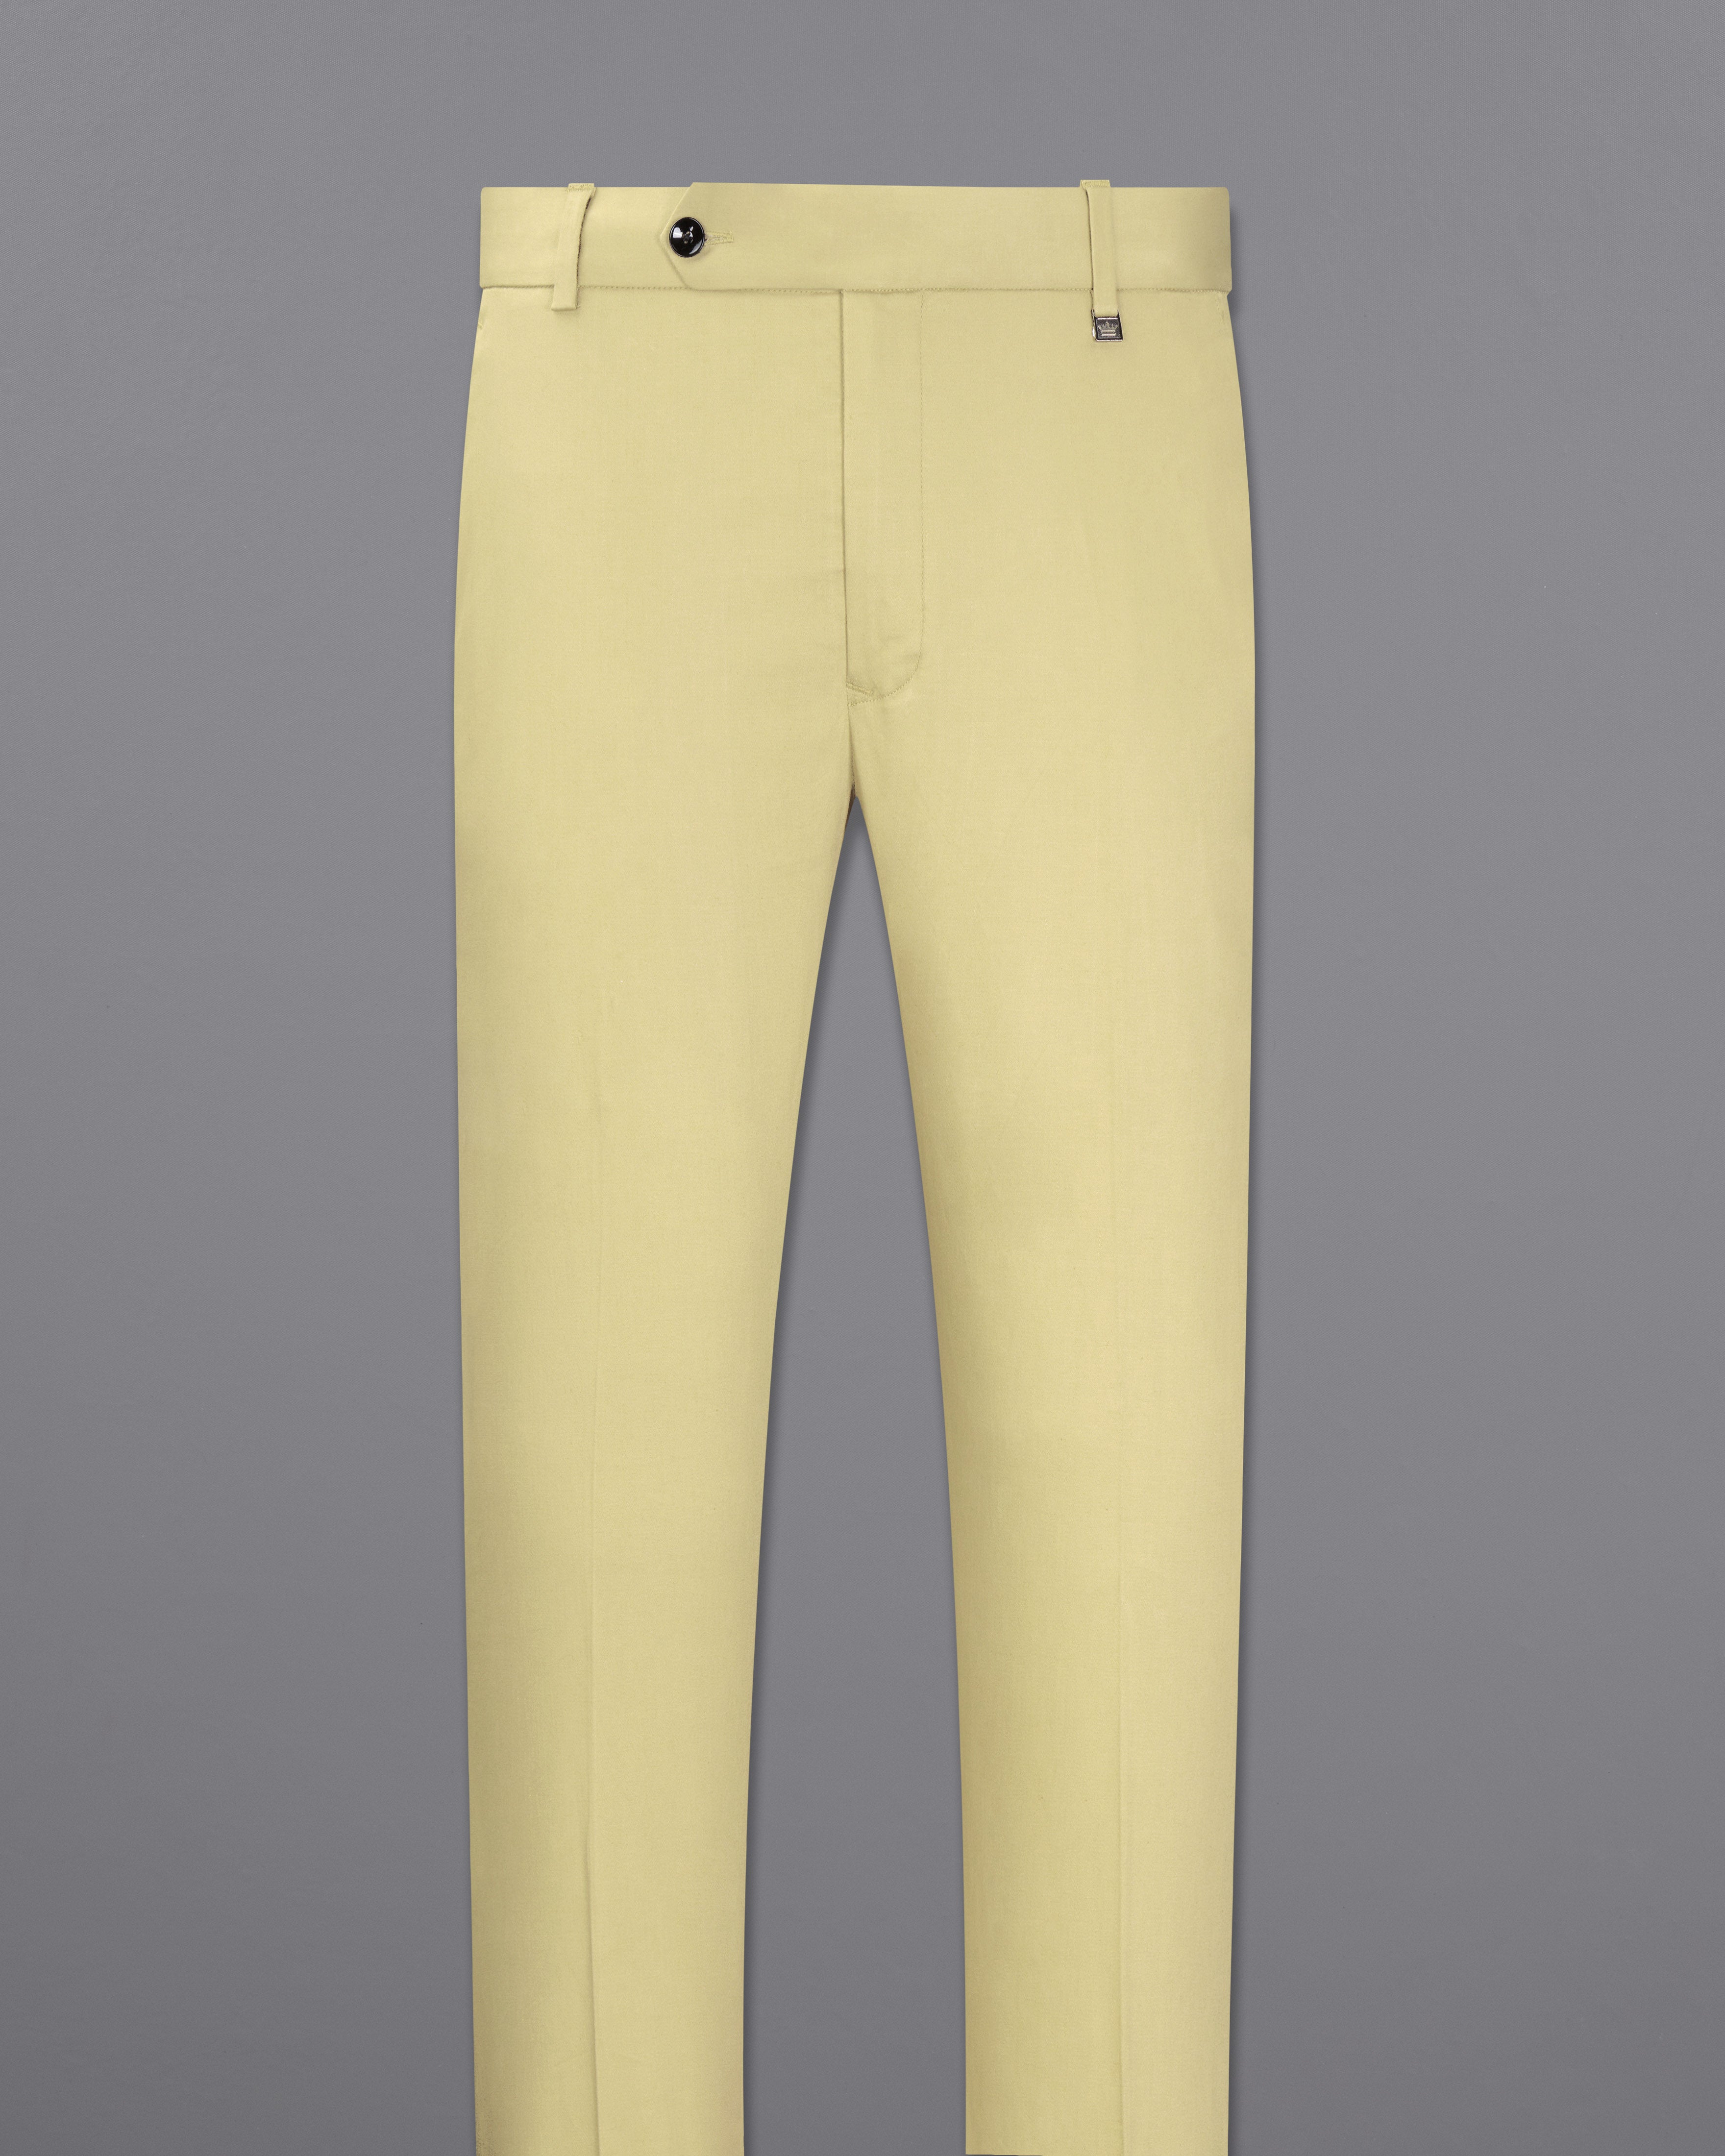 Buy Cream Trousers & Pants for Women by FabbibaPrints Online | Ajio.com